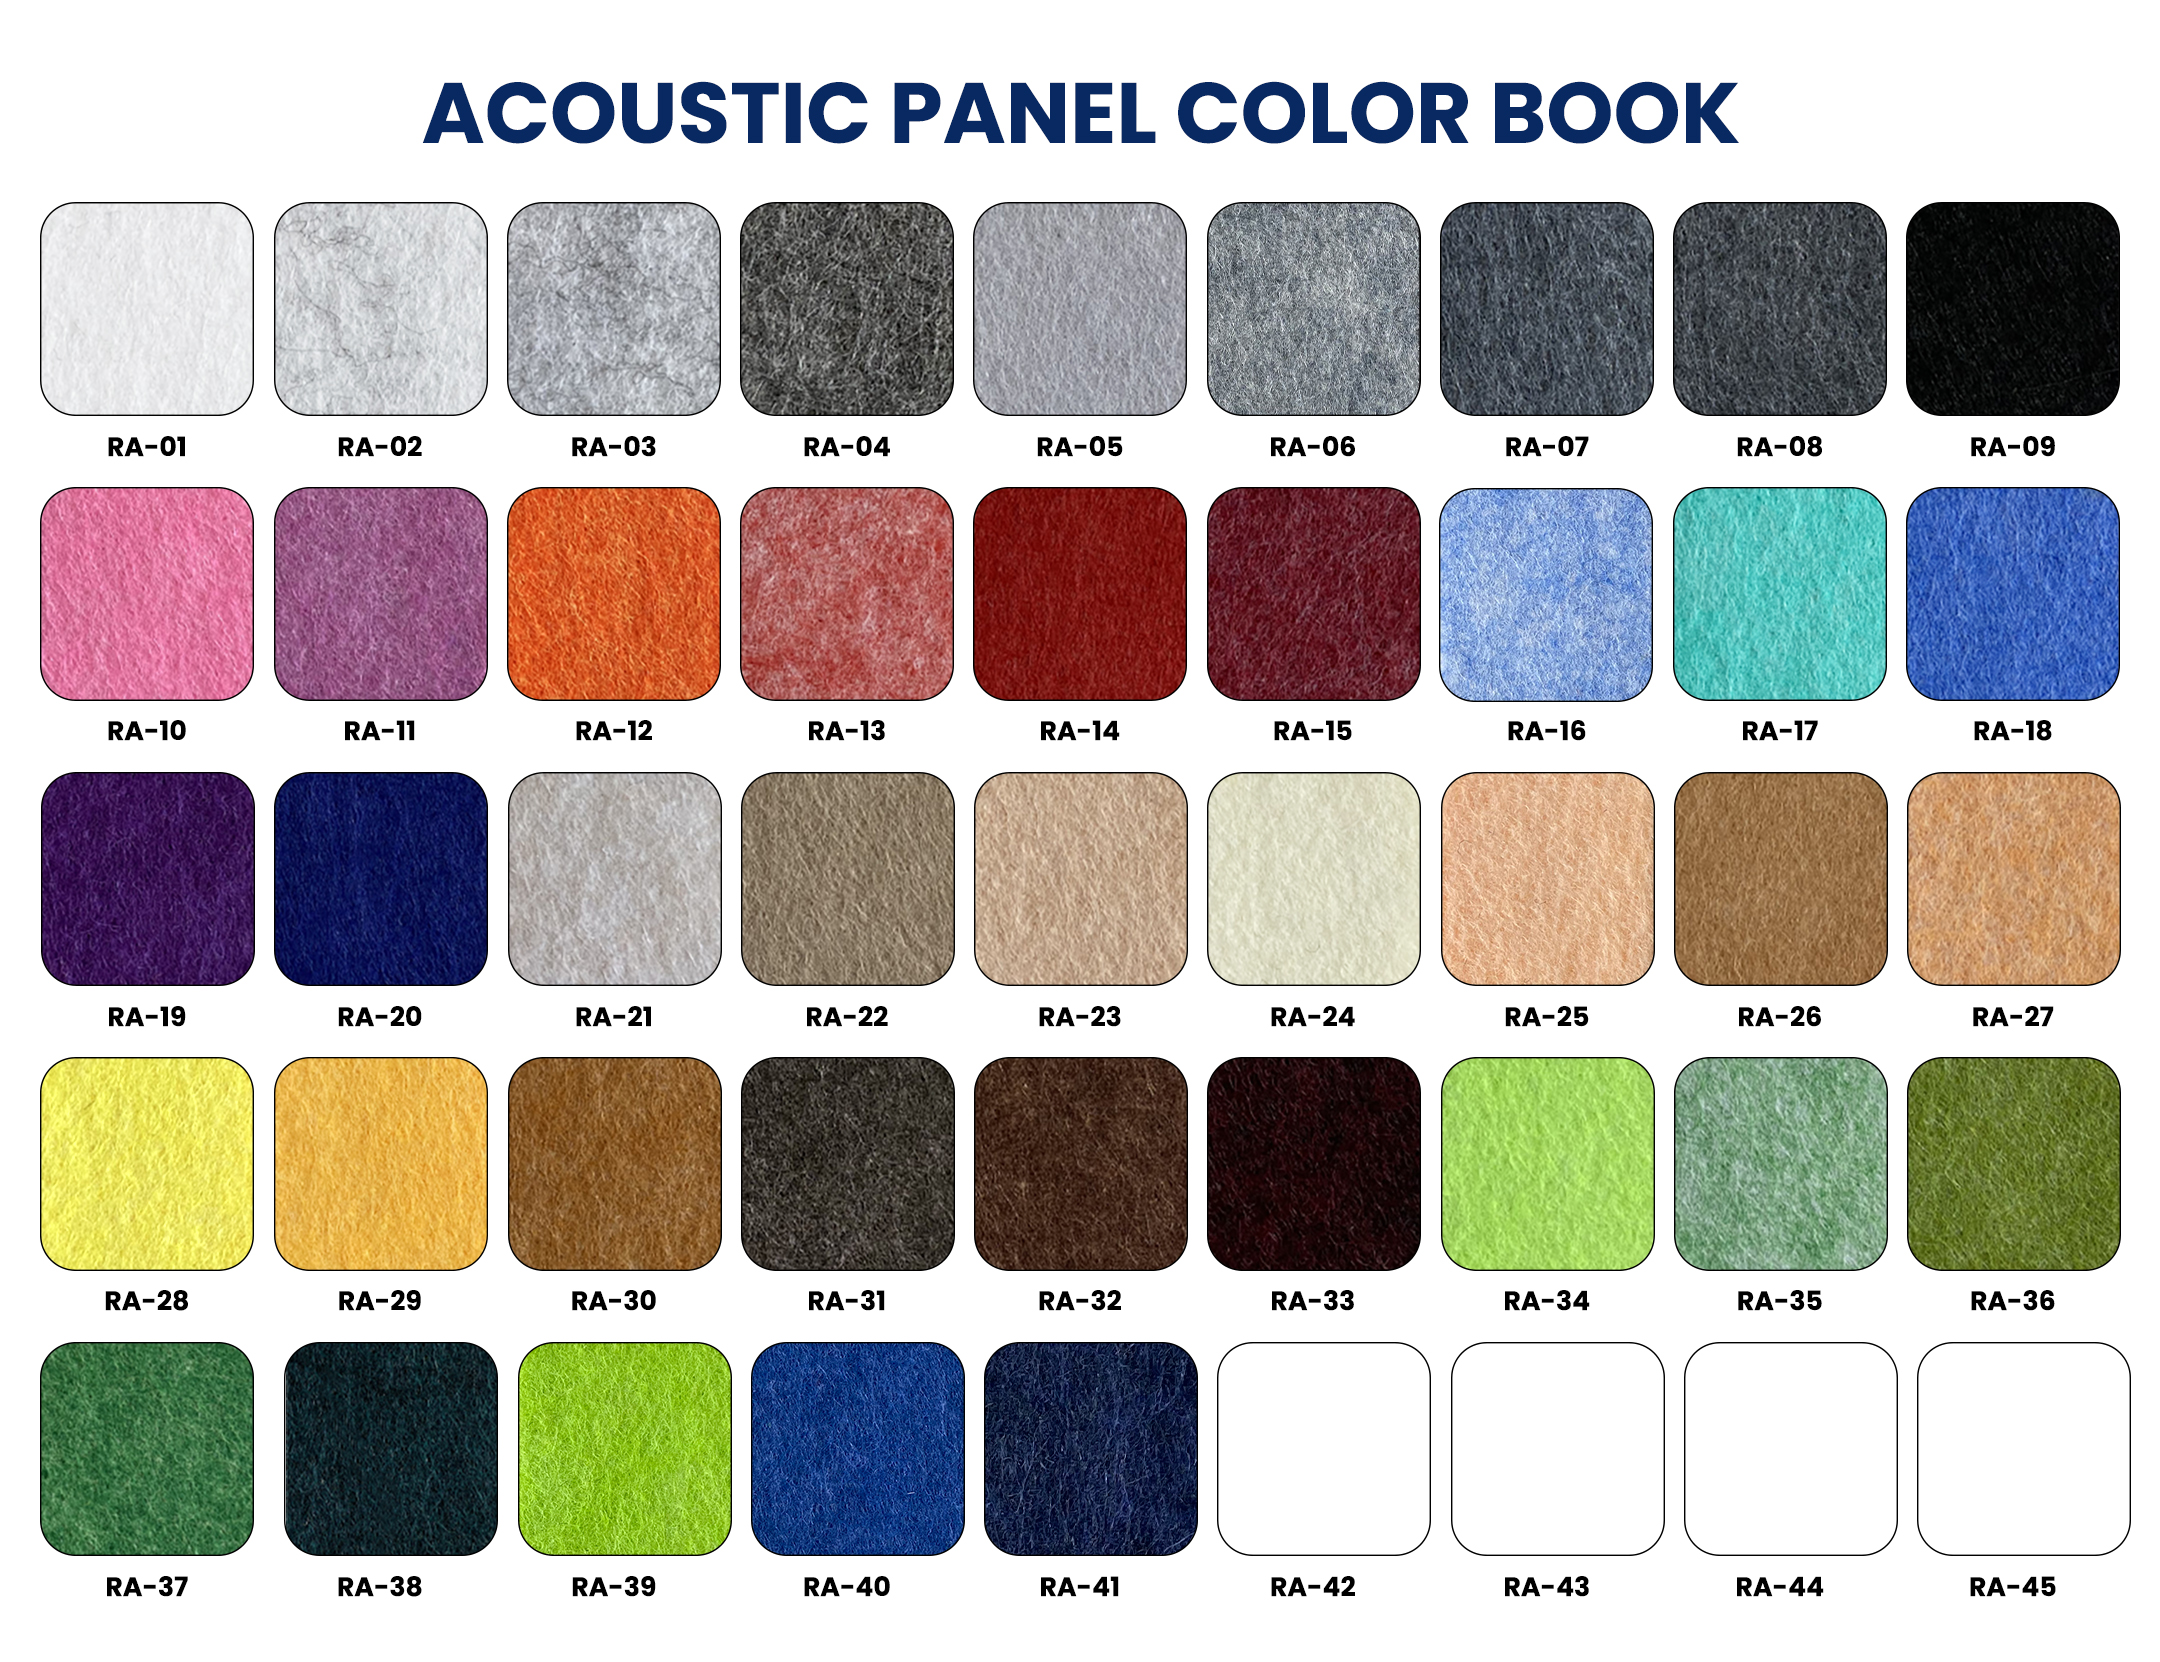 Offer OEM design of the Acoustic Felt Pin Board.